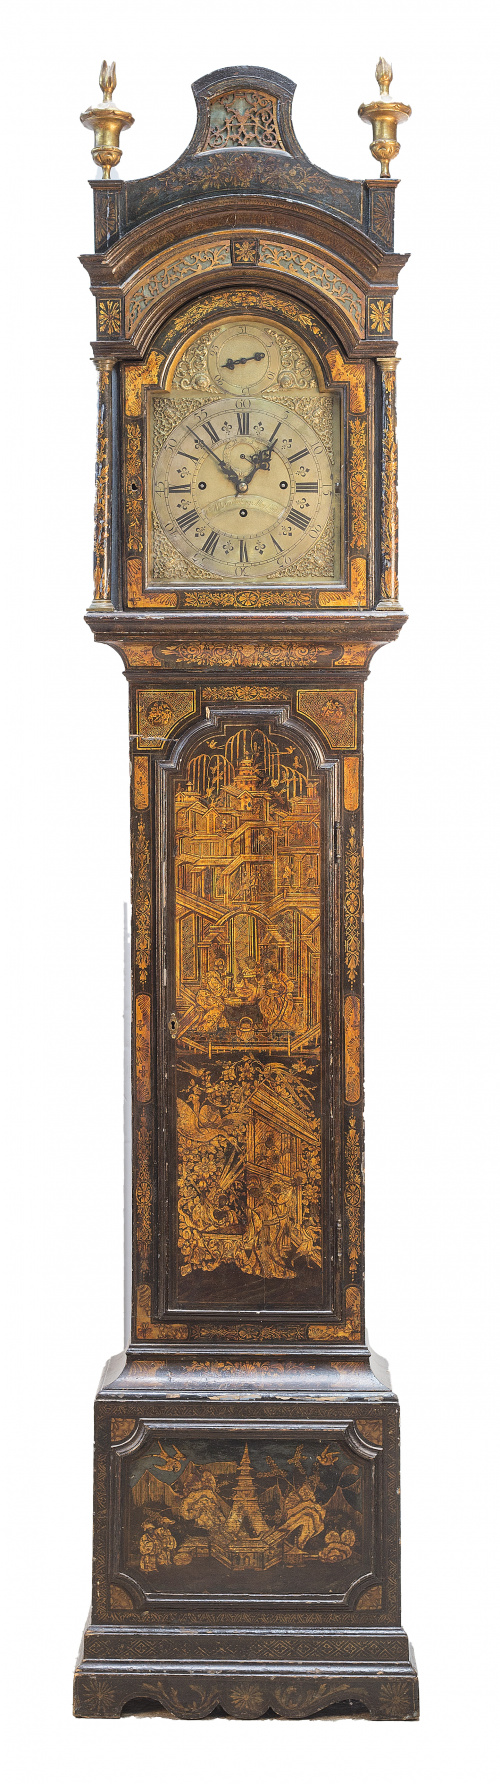 William Webster*Reloj Jorge II de caja alta o “Grand fath